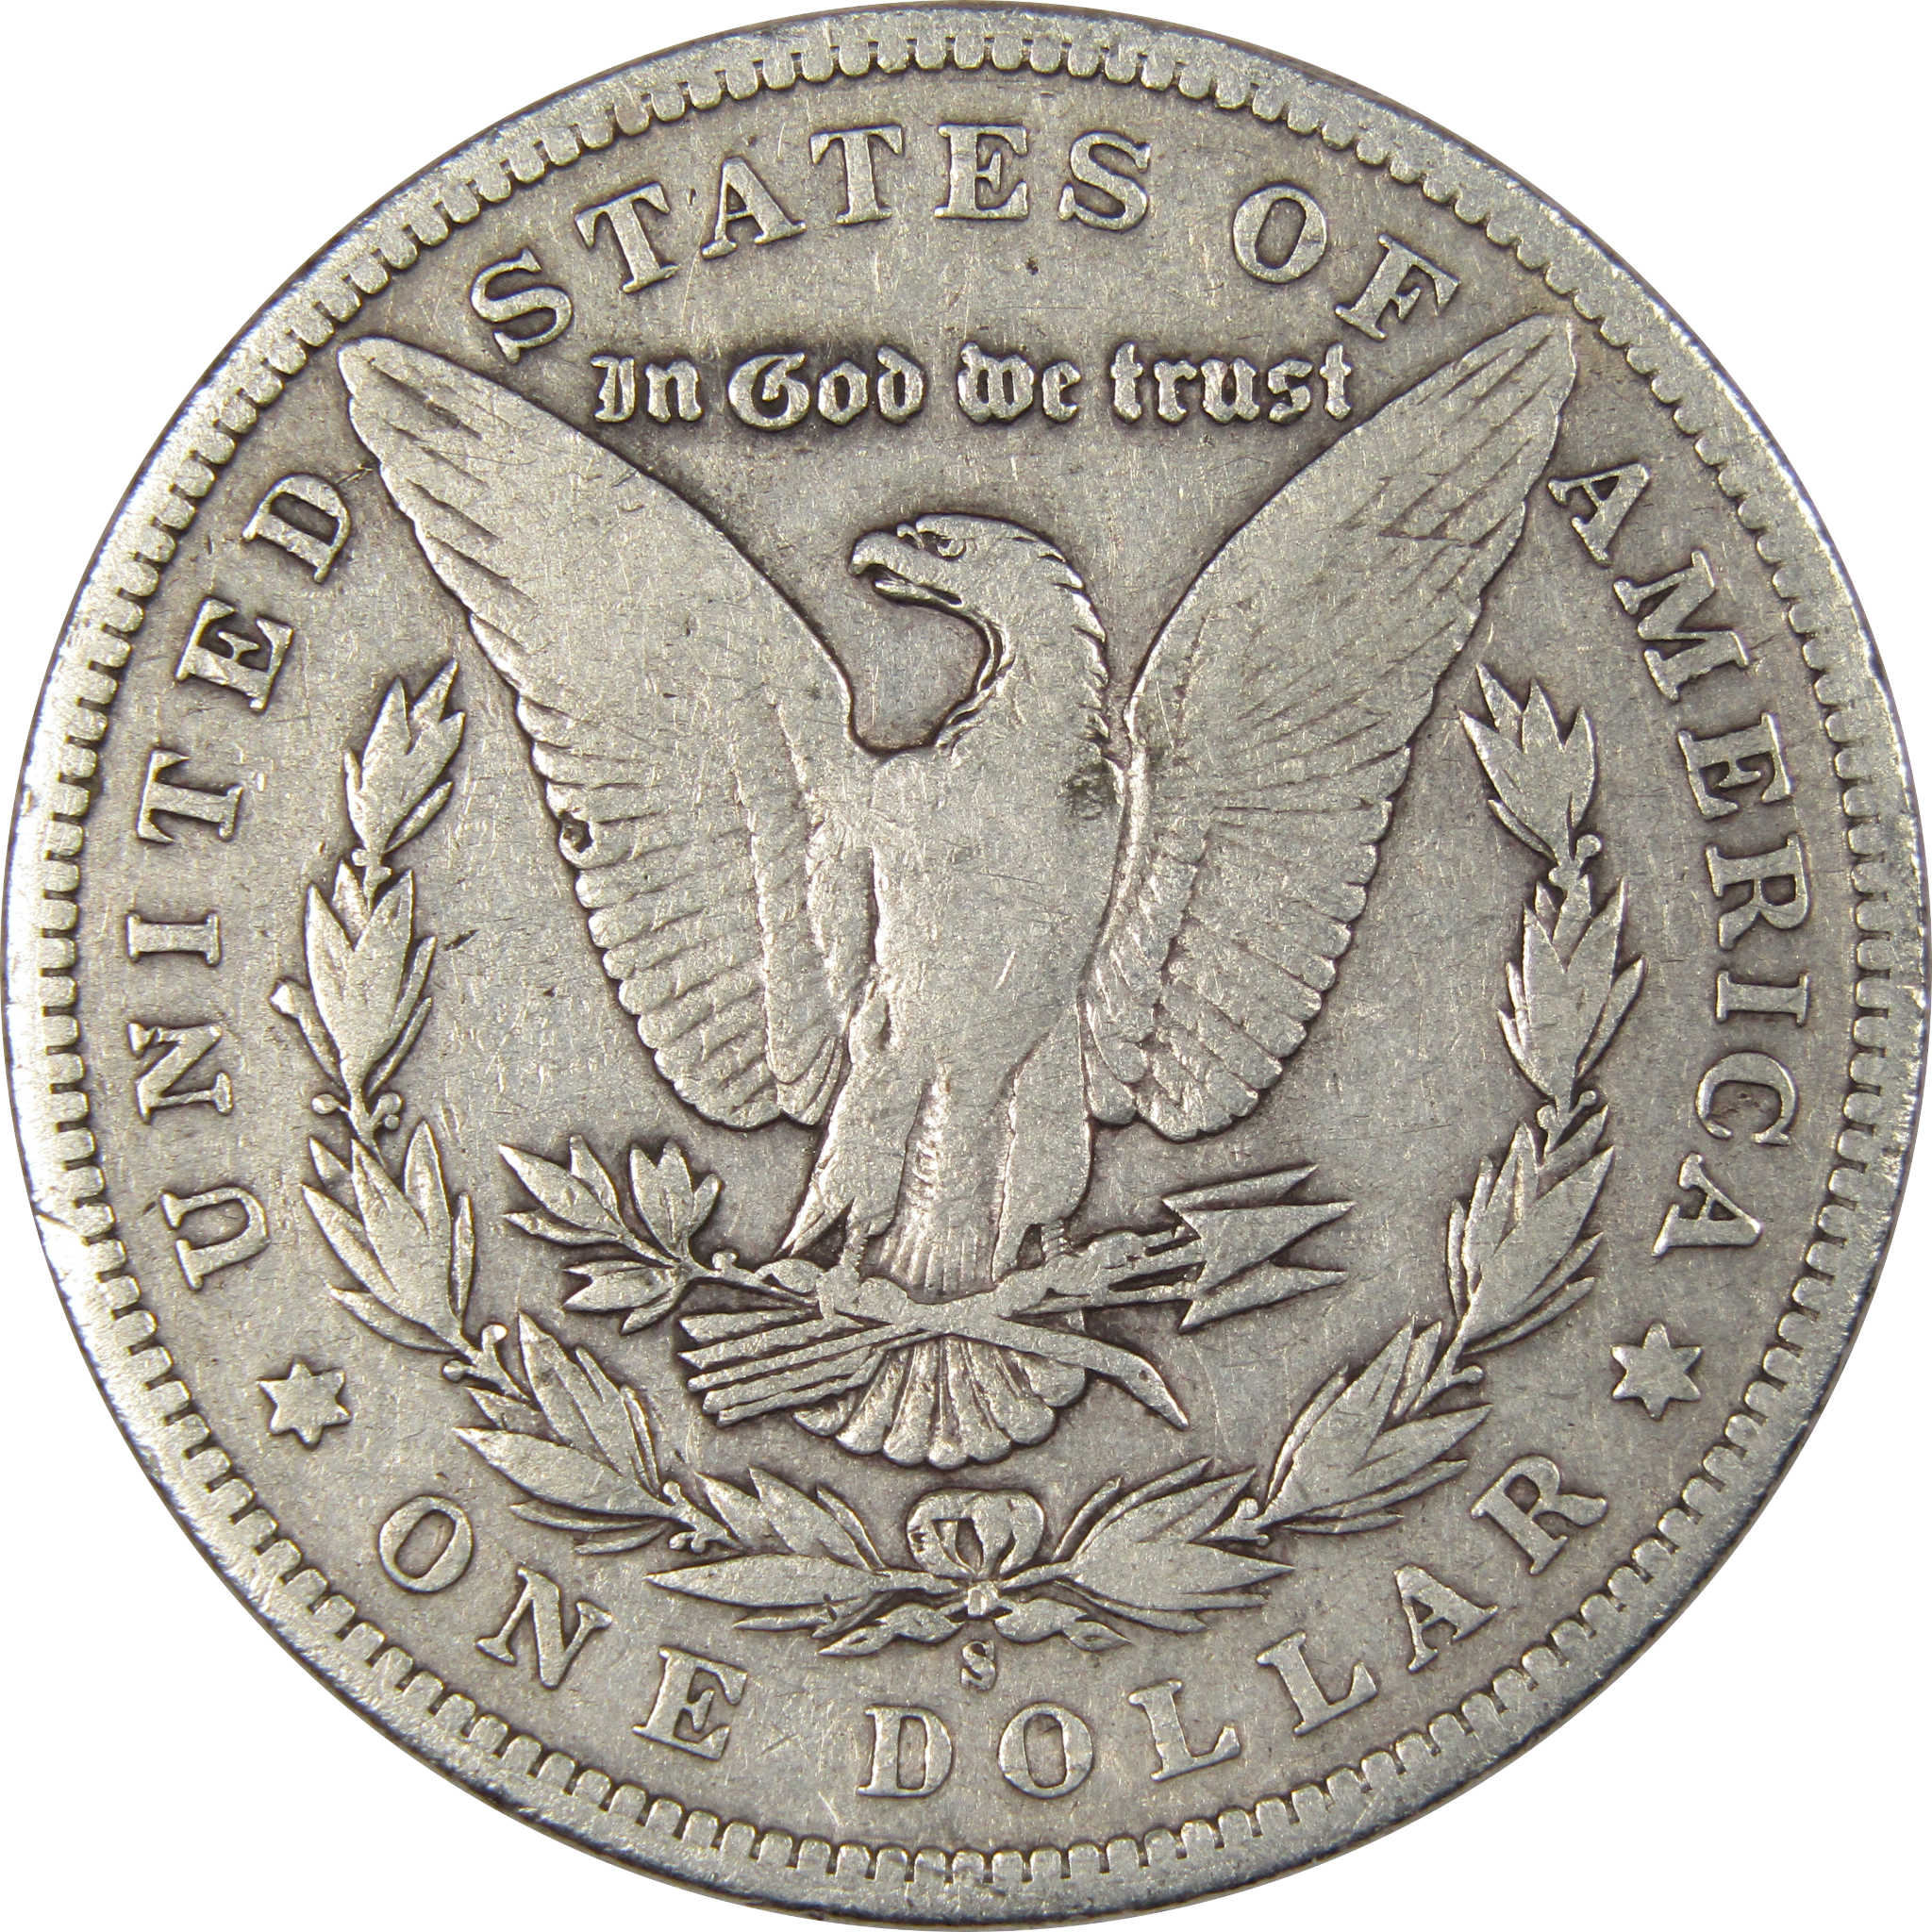 1898 S Morgan Dollar VG Very Good 90% Silver US Coin SKU:IPC8316 - Morgan coin - Morgan silver dollar - Morgan silver dollar for sale - Profile Coins &amp; Collectibles